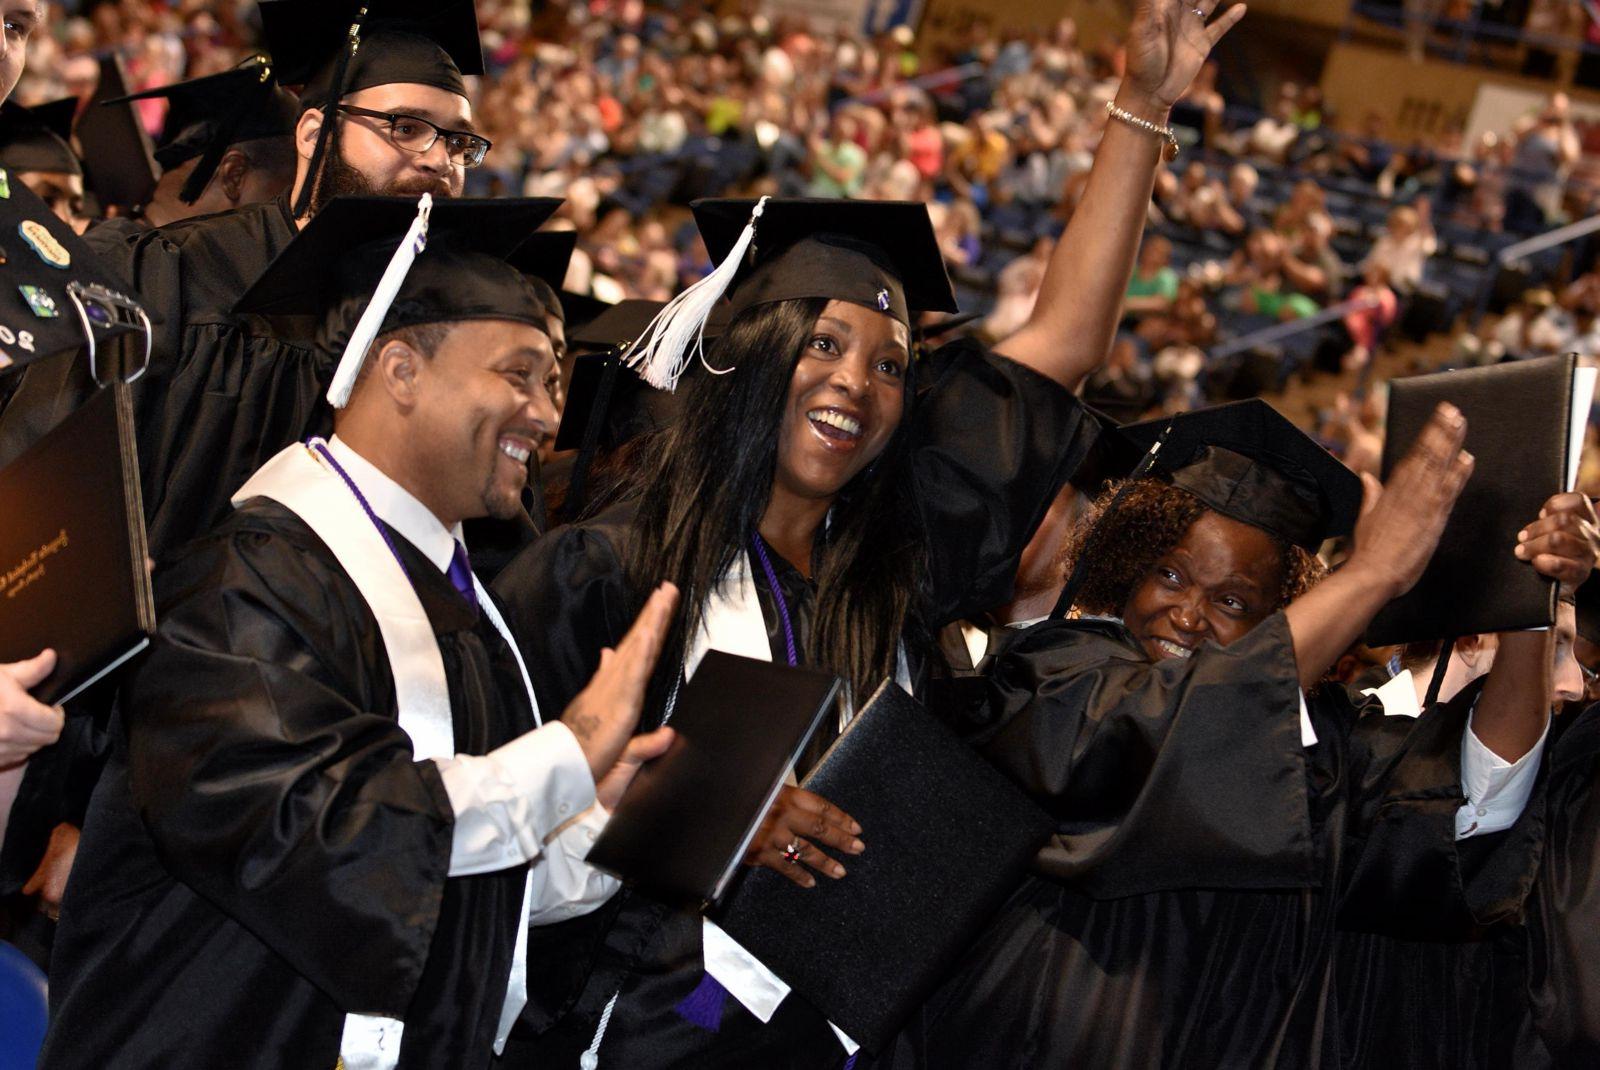 A forest green, hyperlinked, 白色的技术信用证书按钮, bolded, 在文字下面加了下划线，上面是一群拥挤的毕业生和家人，他们的注意力集中在四名戴着黑色毕业帽、穿着白色流苏长袍和披肩的毕业生身上:一名非洲裔美国女性微笑着，左手举着一个黑人文凭/学位托, 在她的左边，一位非洲裔美国女性微笑着举起戴着金属手镯的右手，左手拿着她的黑人学位证书, 一位非裔美国男性微笑着站在那里，右手拿着他的黑人文凭/学位证书，左手举在后面, 一个留着黑胡子戴着眼镜的白人男性站在他们三人的右边.